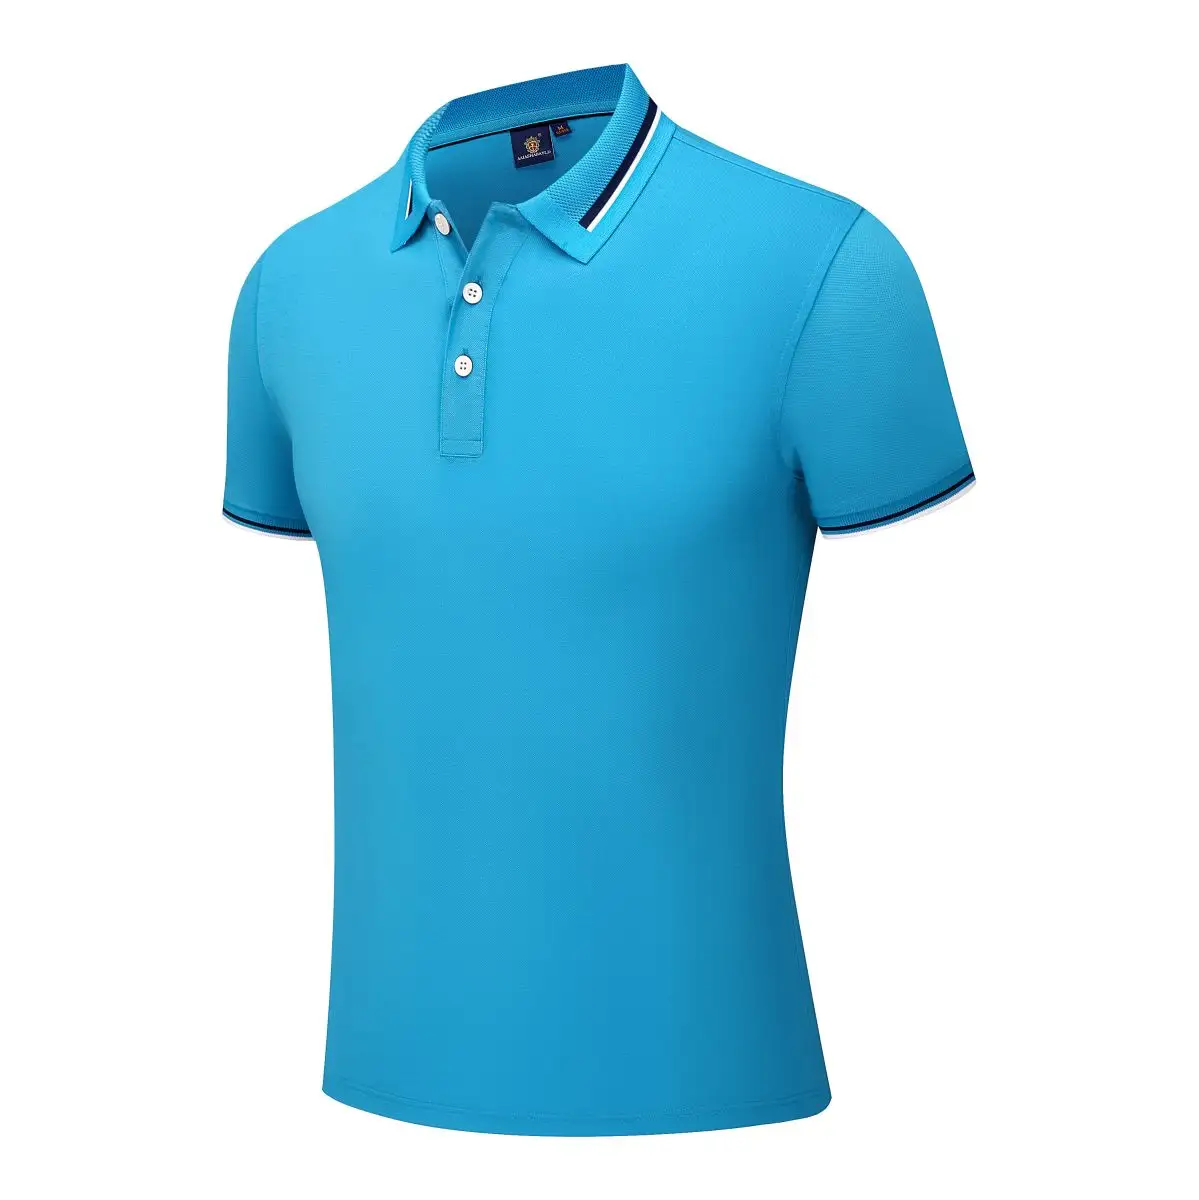 Toptan ipek pamuk düz rahat özel işlemeli logo erkek Golf Polo gömlek camiseta polo dökün homme